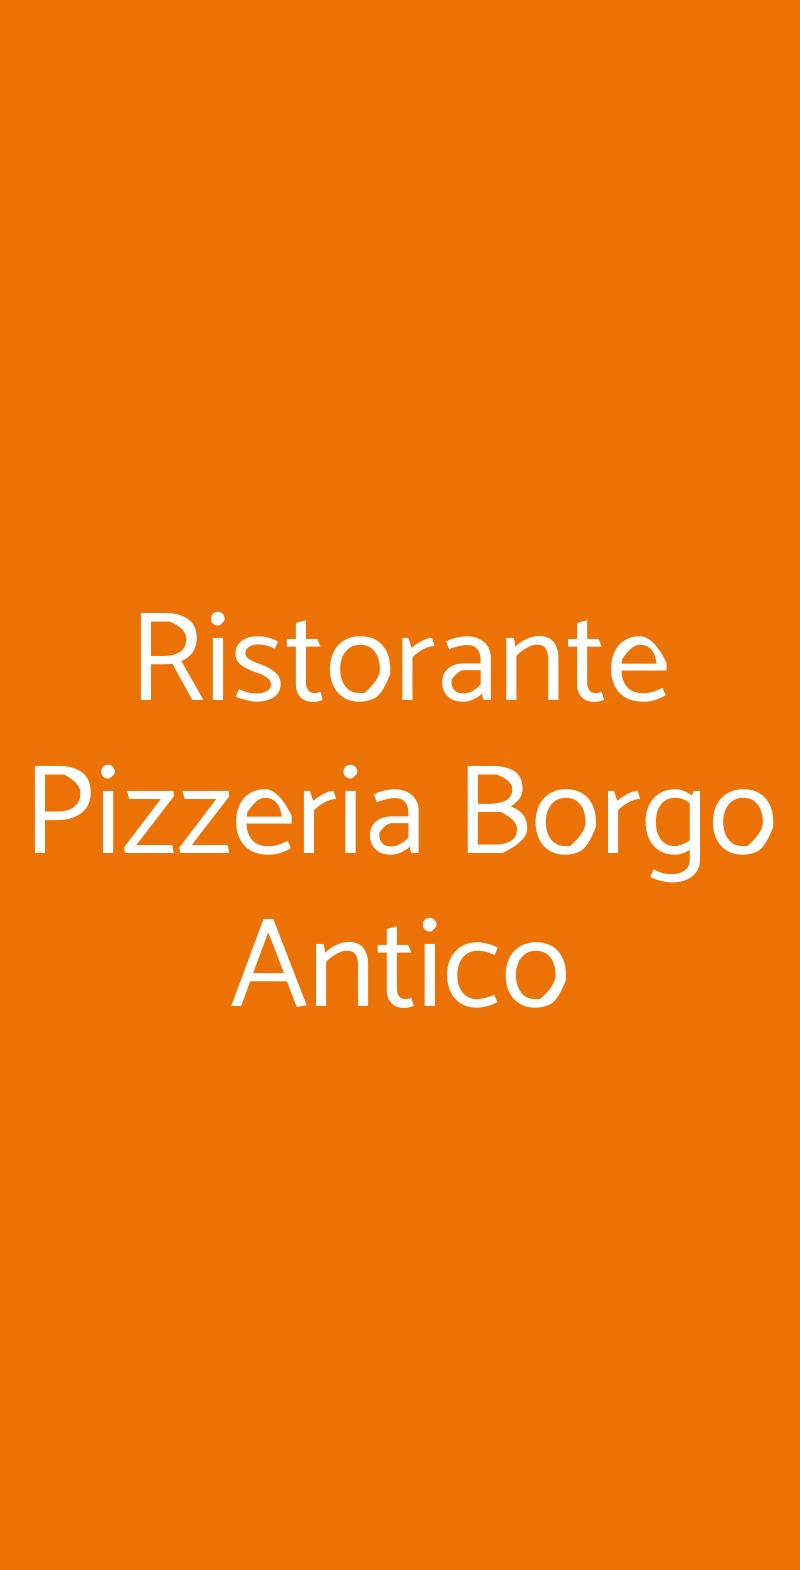 Ristorante Pizzeria Borgo Antico Torino di Sangro menù 1 pagina